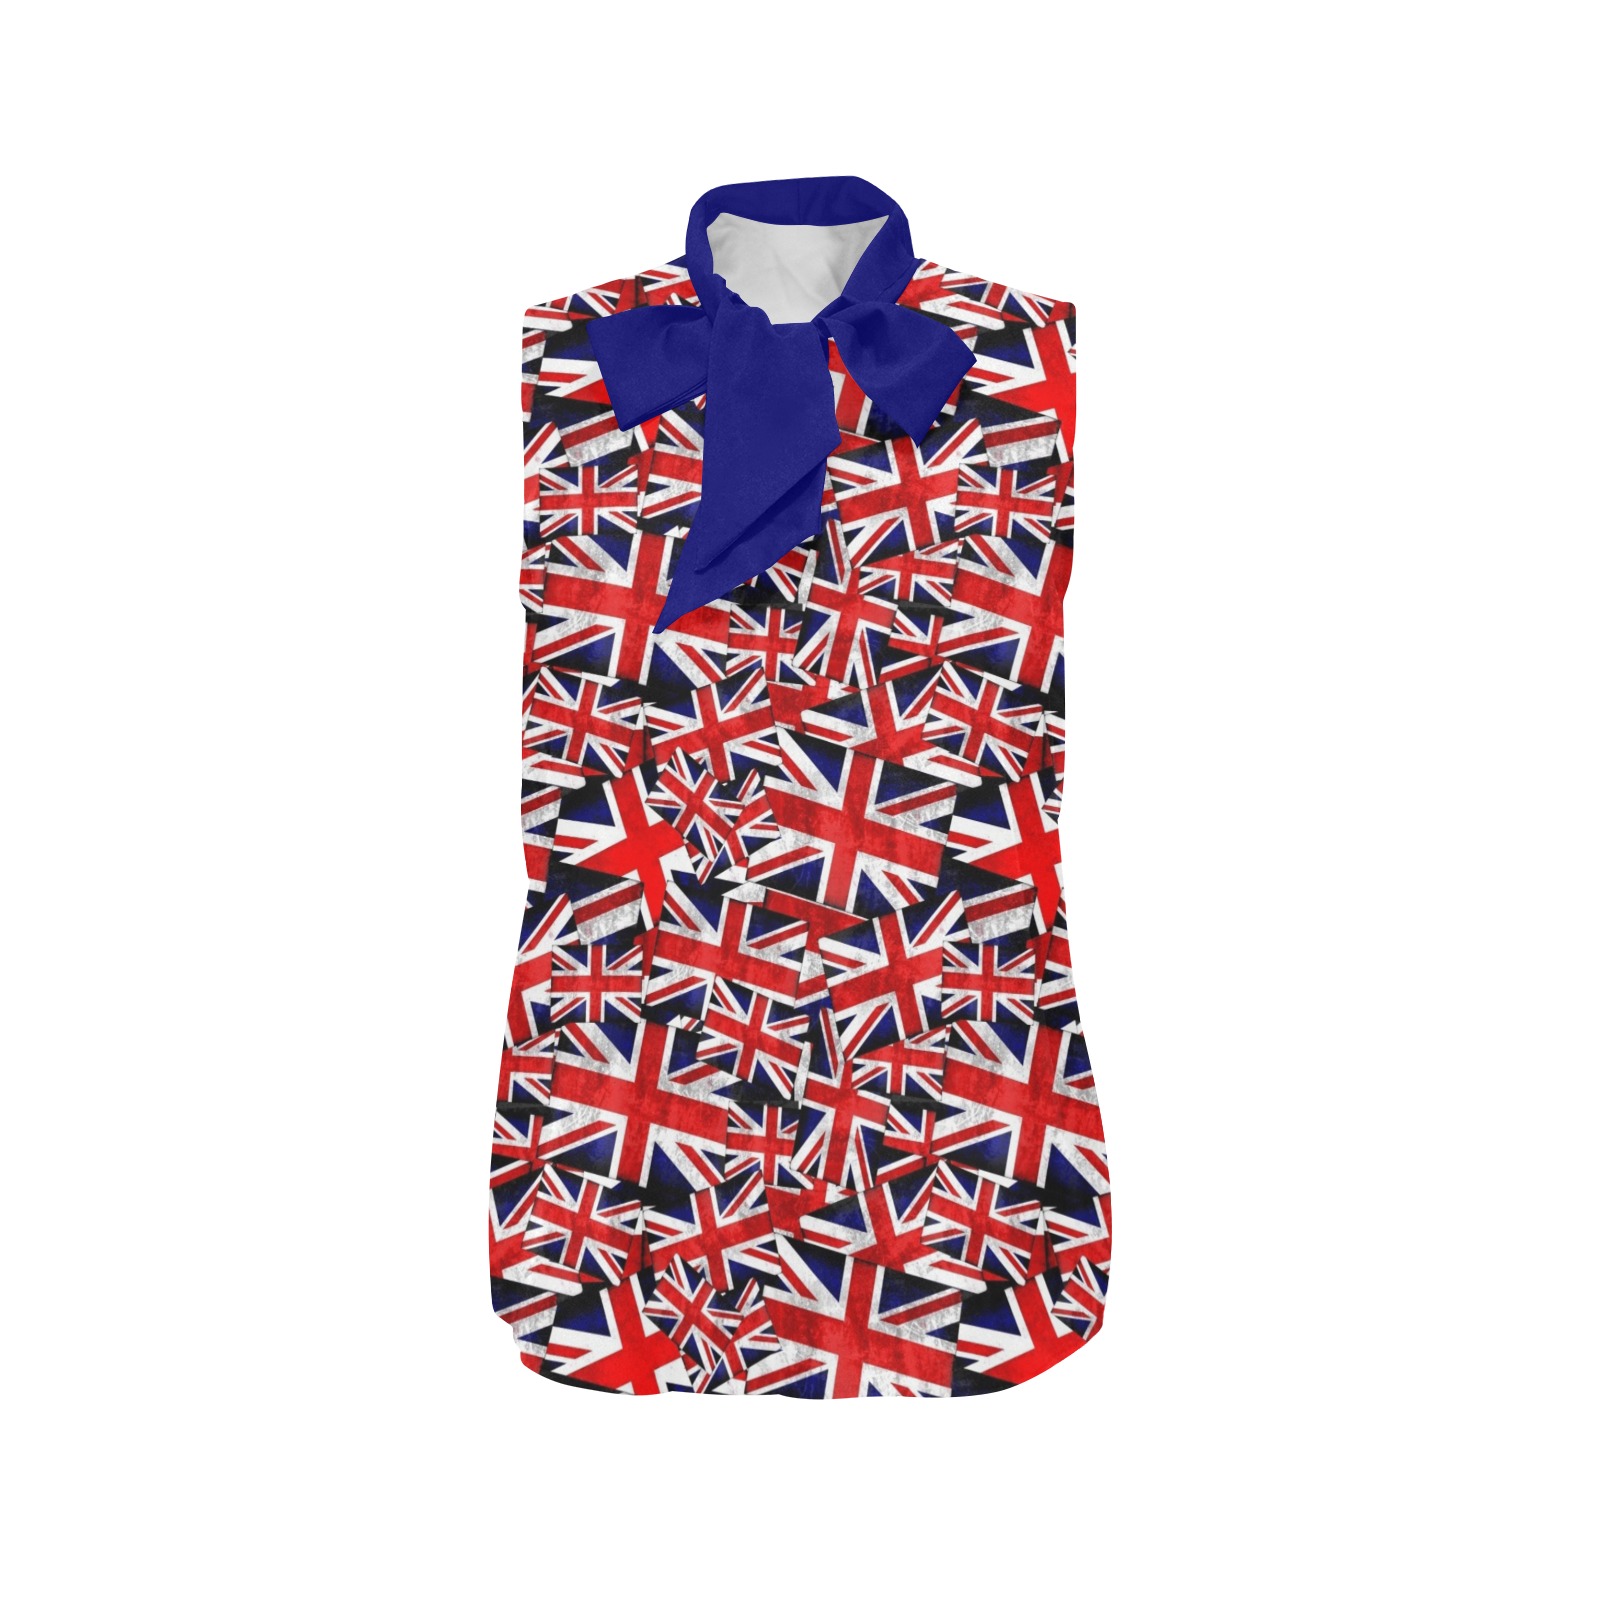 Union Jack British Flags - Blue Tie Women's Bow Tie V-Neck Sleeveless Shirt (Model T69)